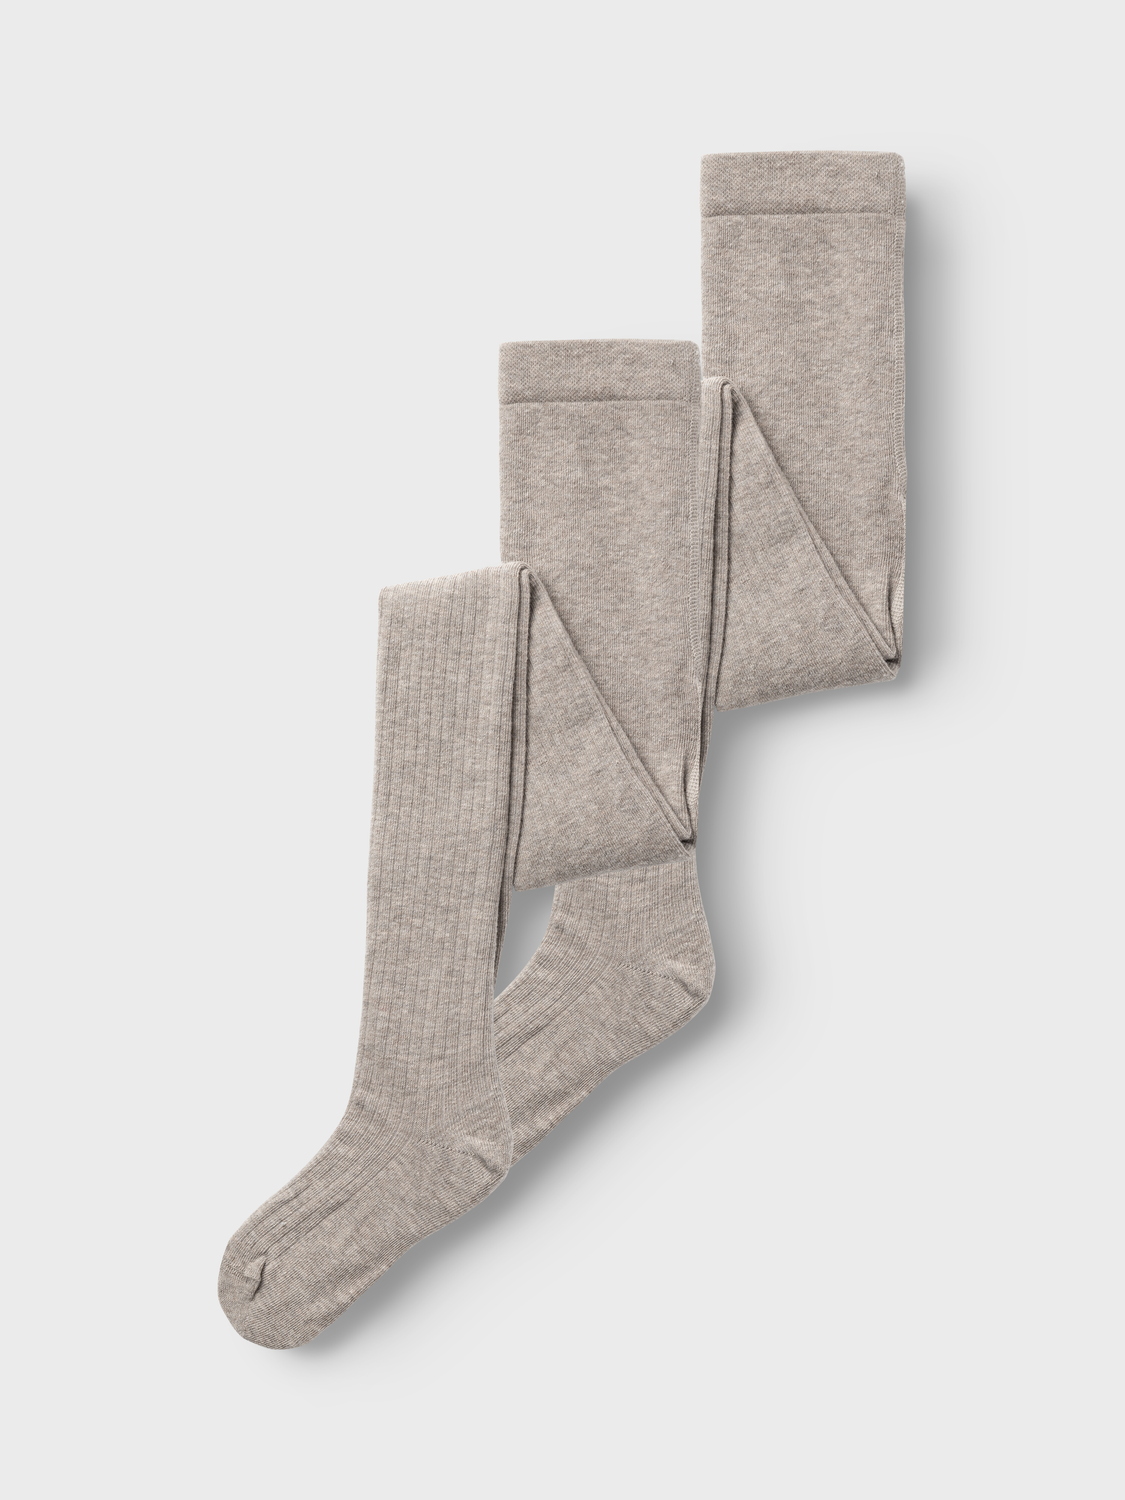 NKNPANTYHOSE Socks - Pure Cashmere